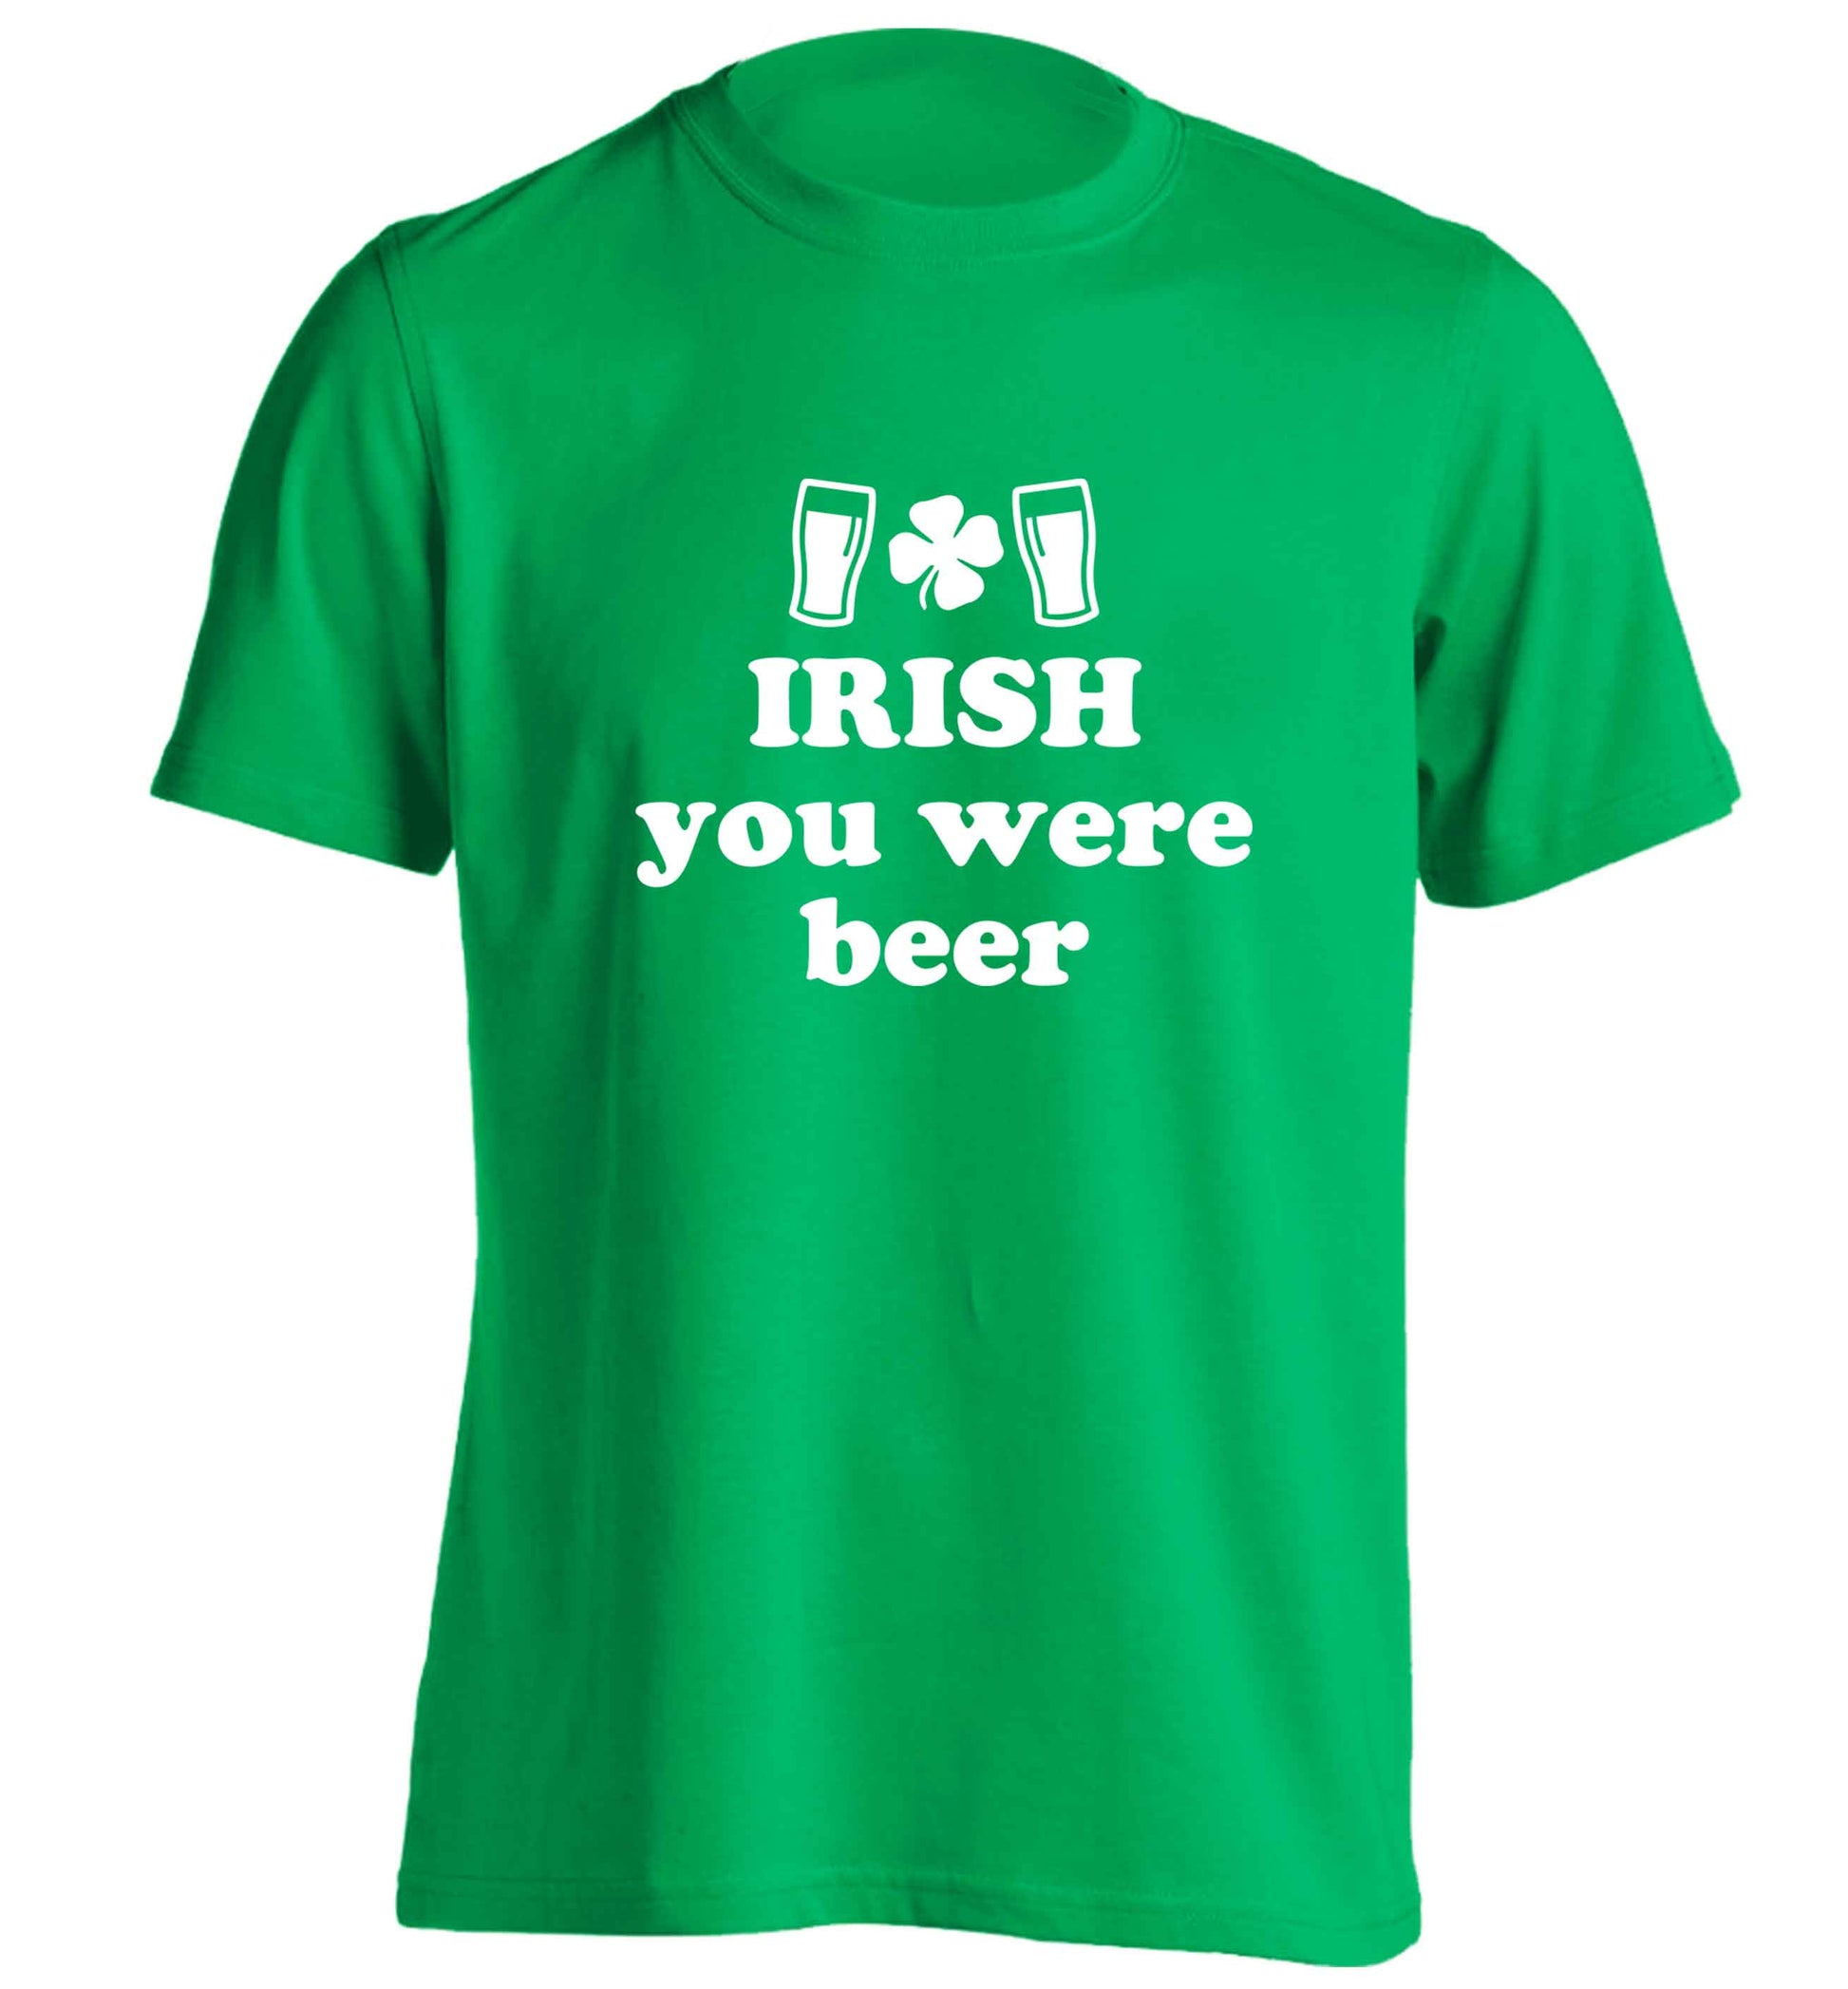 Irish you were beer adults unisex green Tshirt 2XL